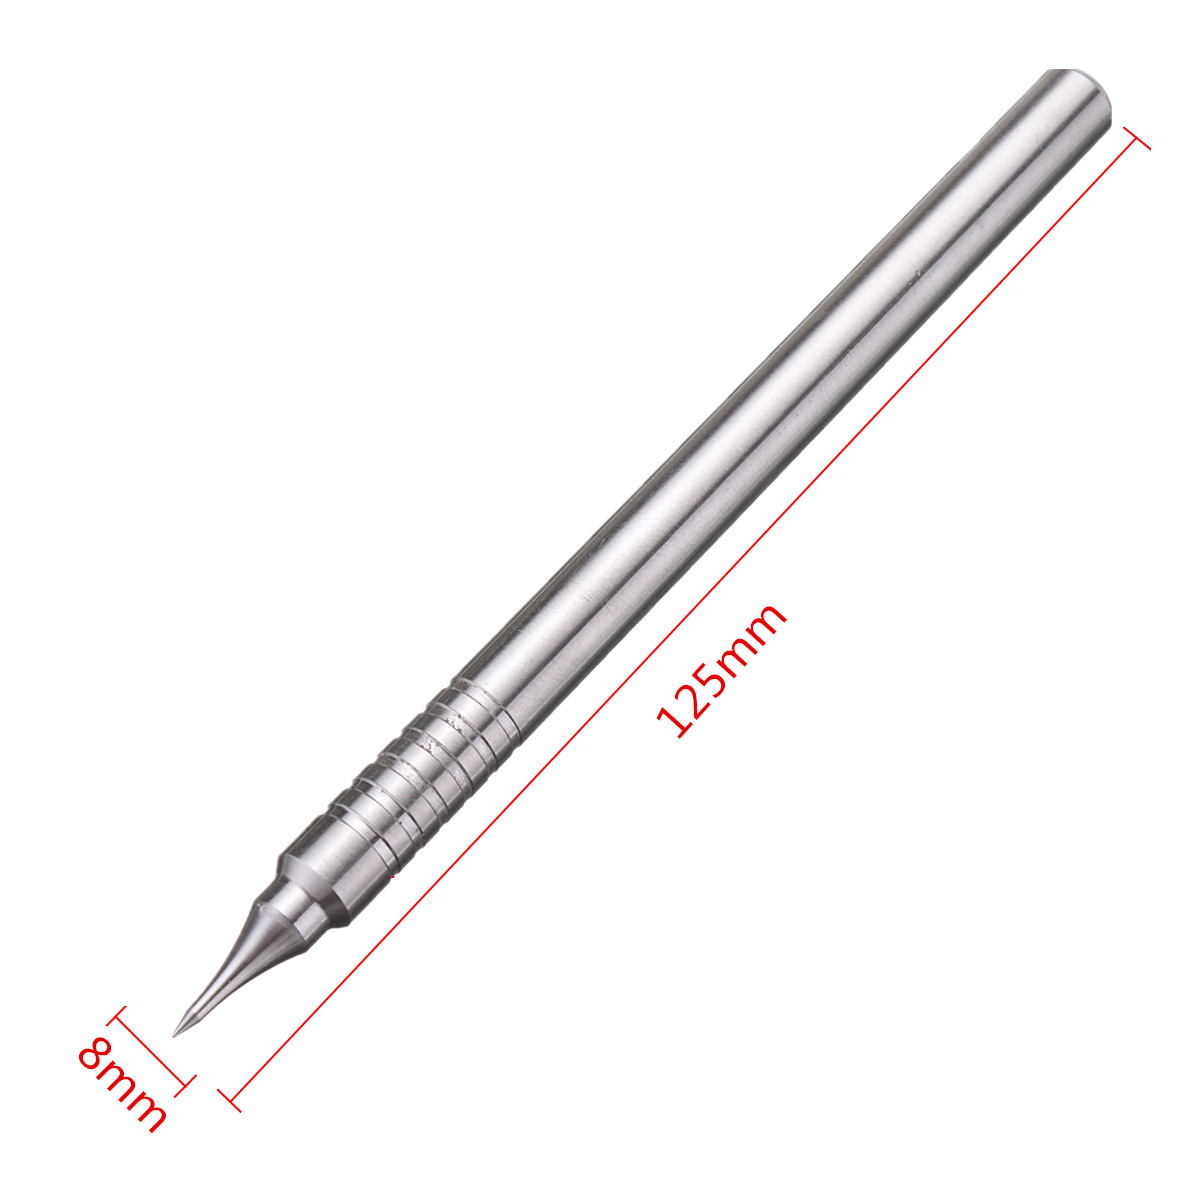 Scriber-Craft-Tool-Scribe-Line-Pen-Model-Tools-for-Plane-Gundam-1149309